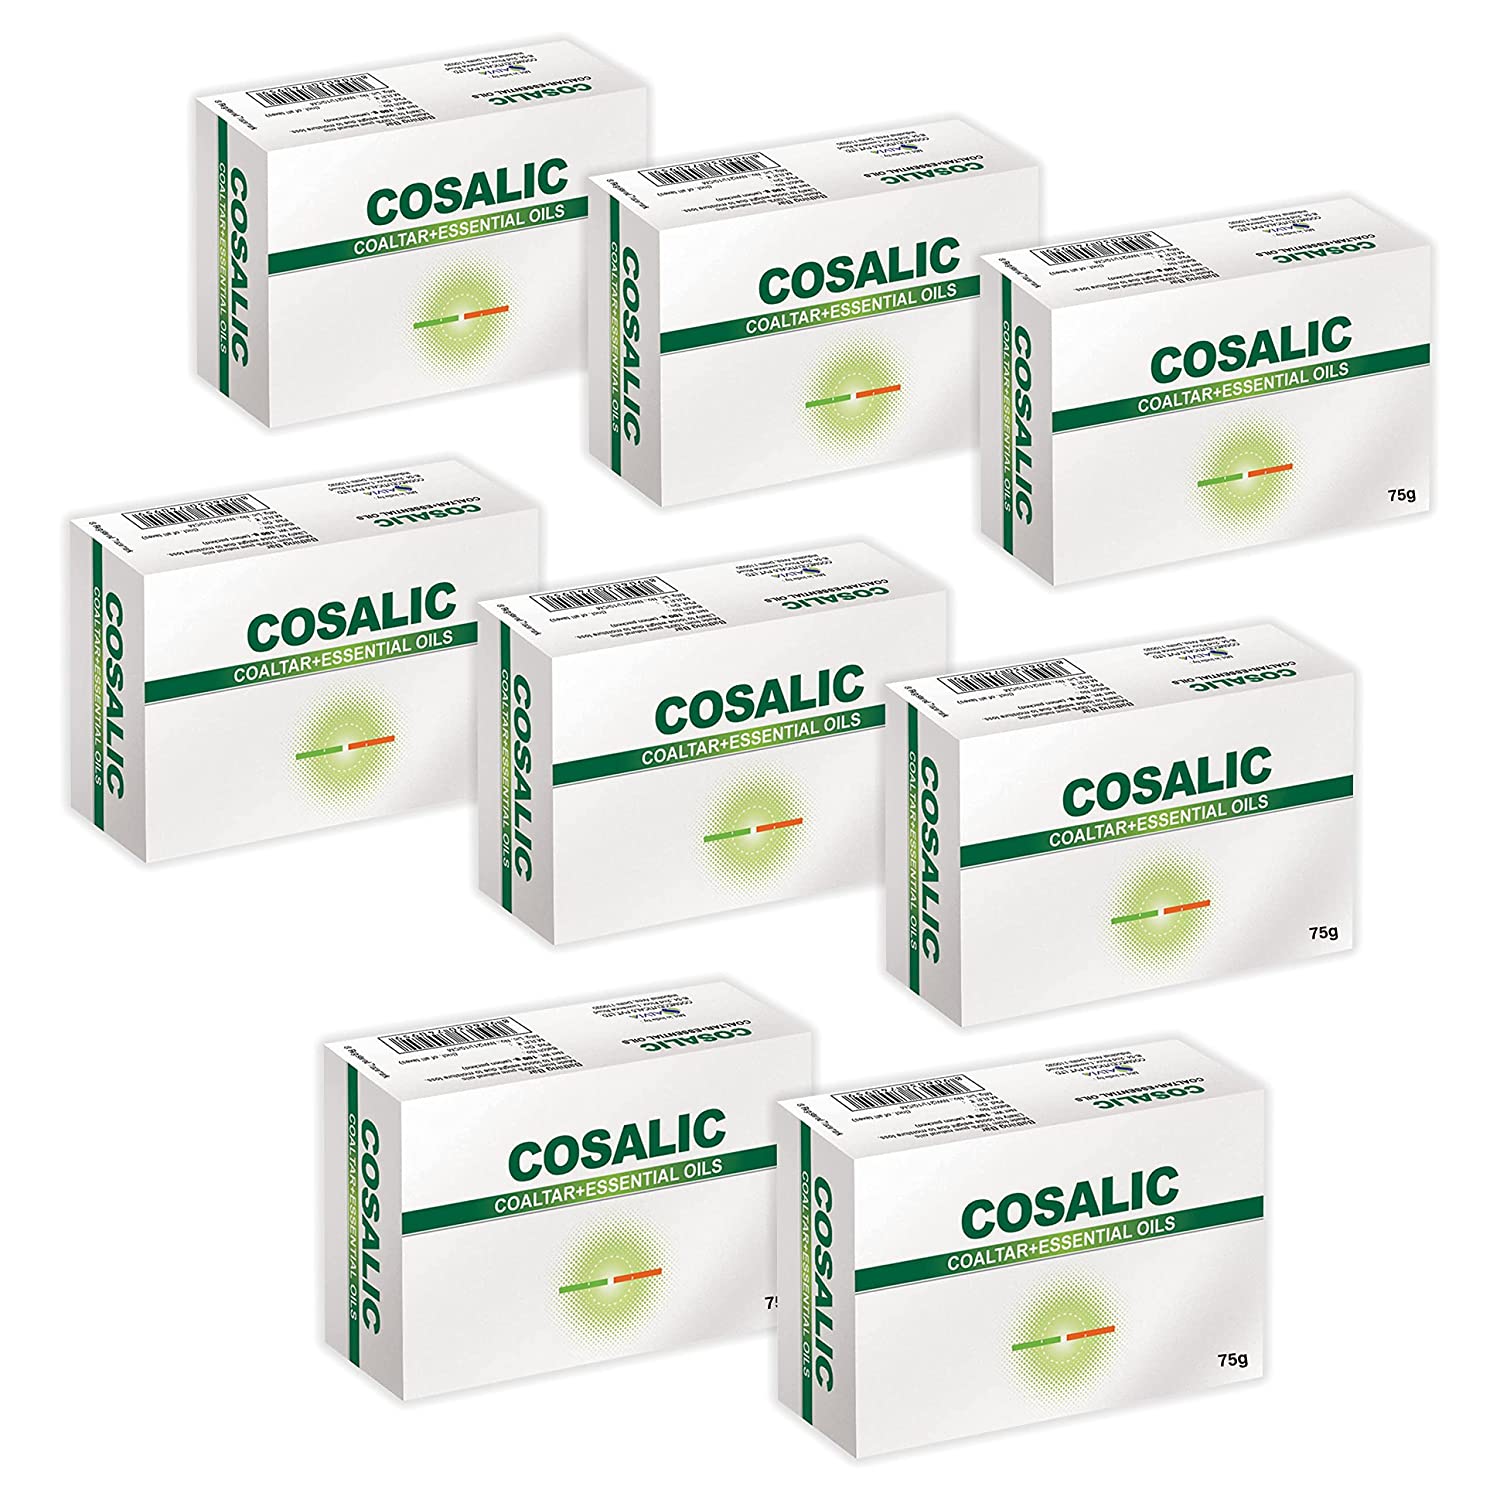 Salve Cosalic Soap Cosalic Coaltar Soap with Essential oils